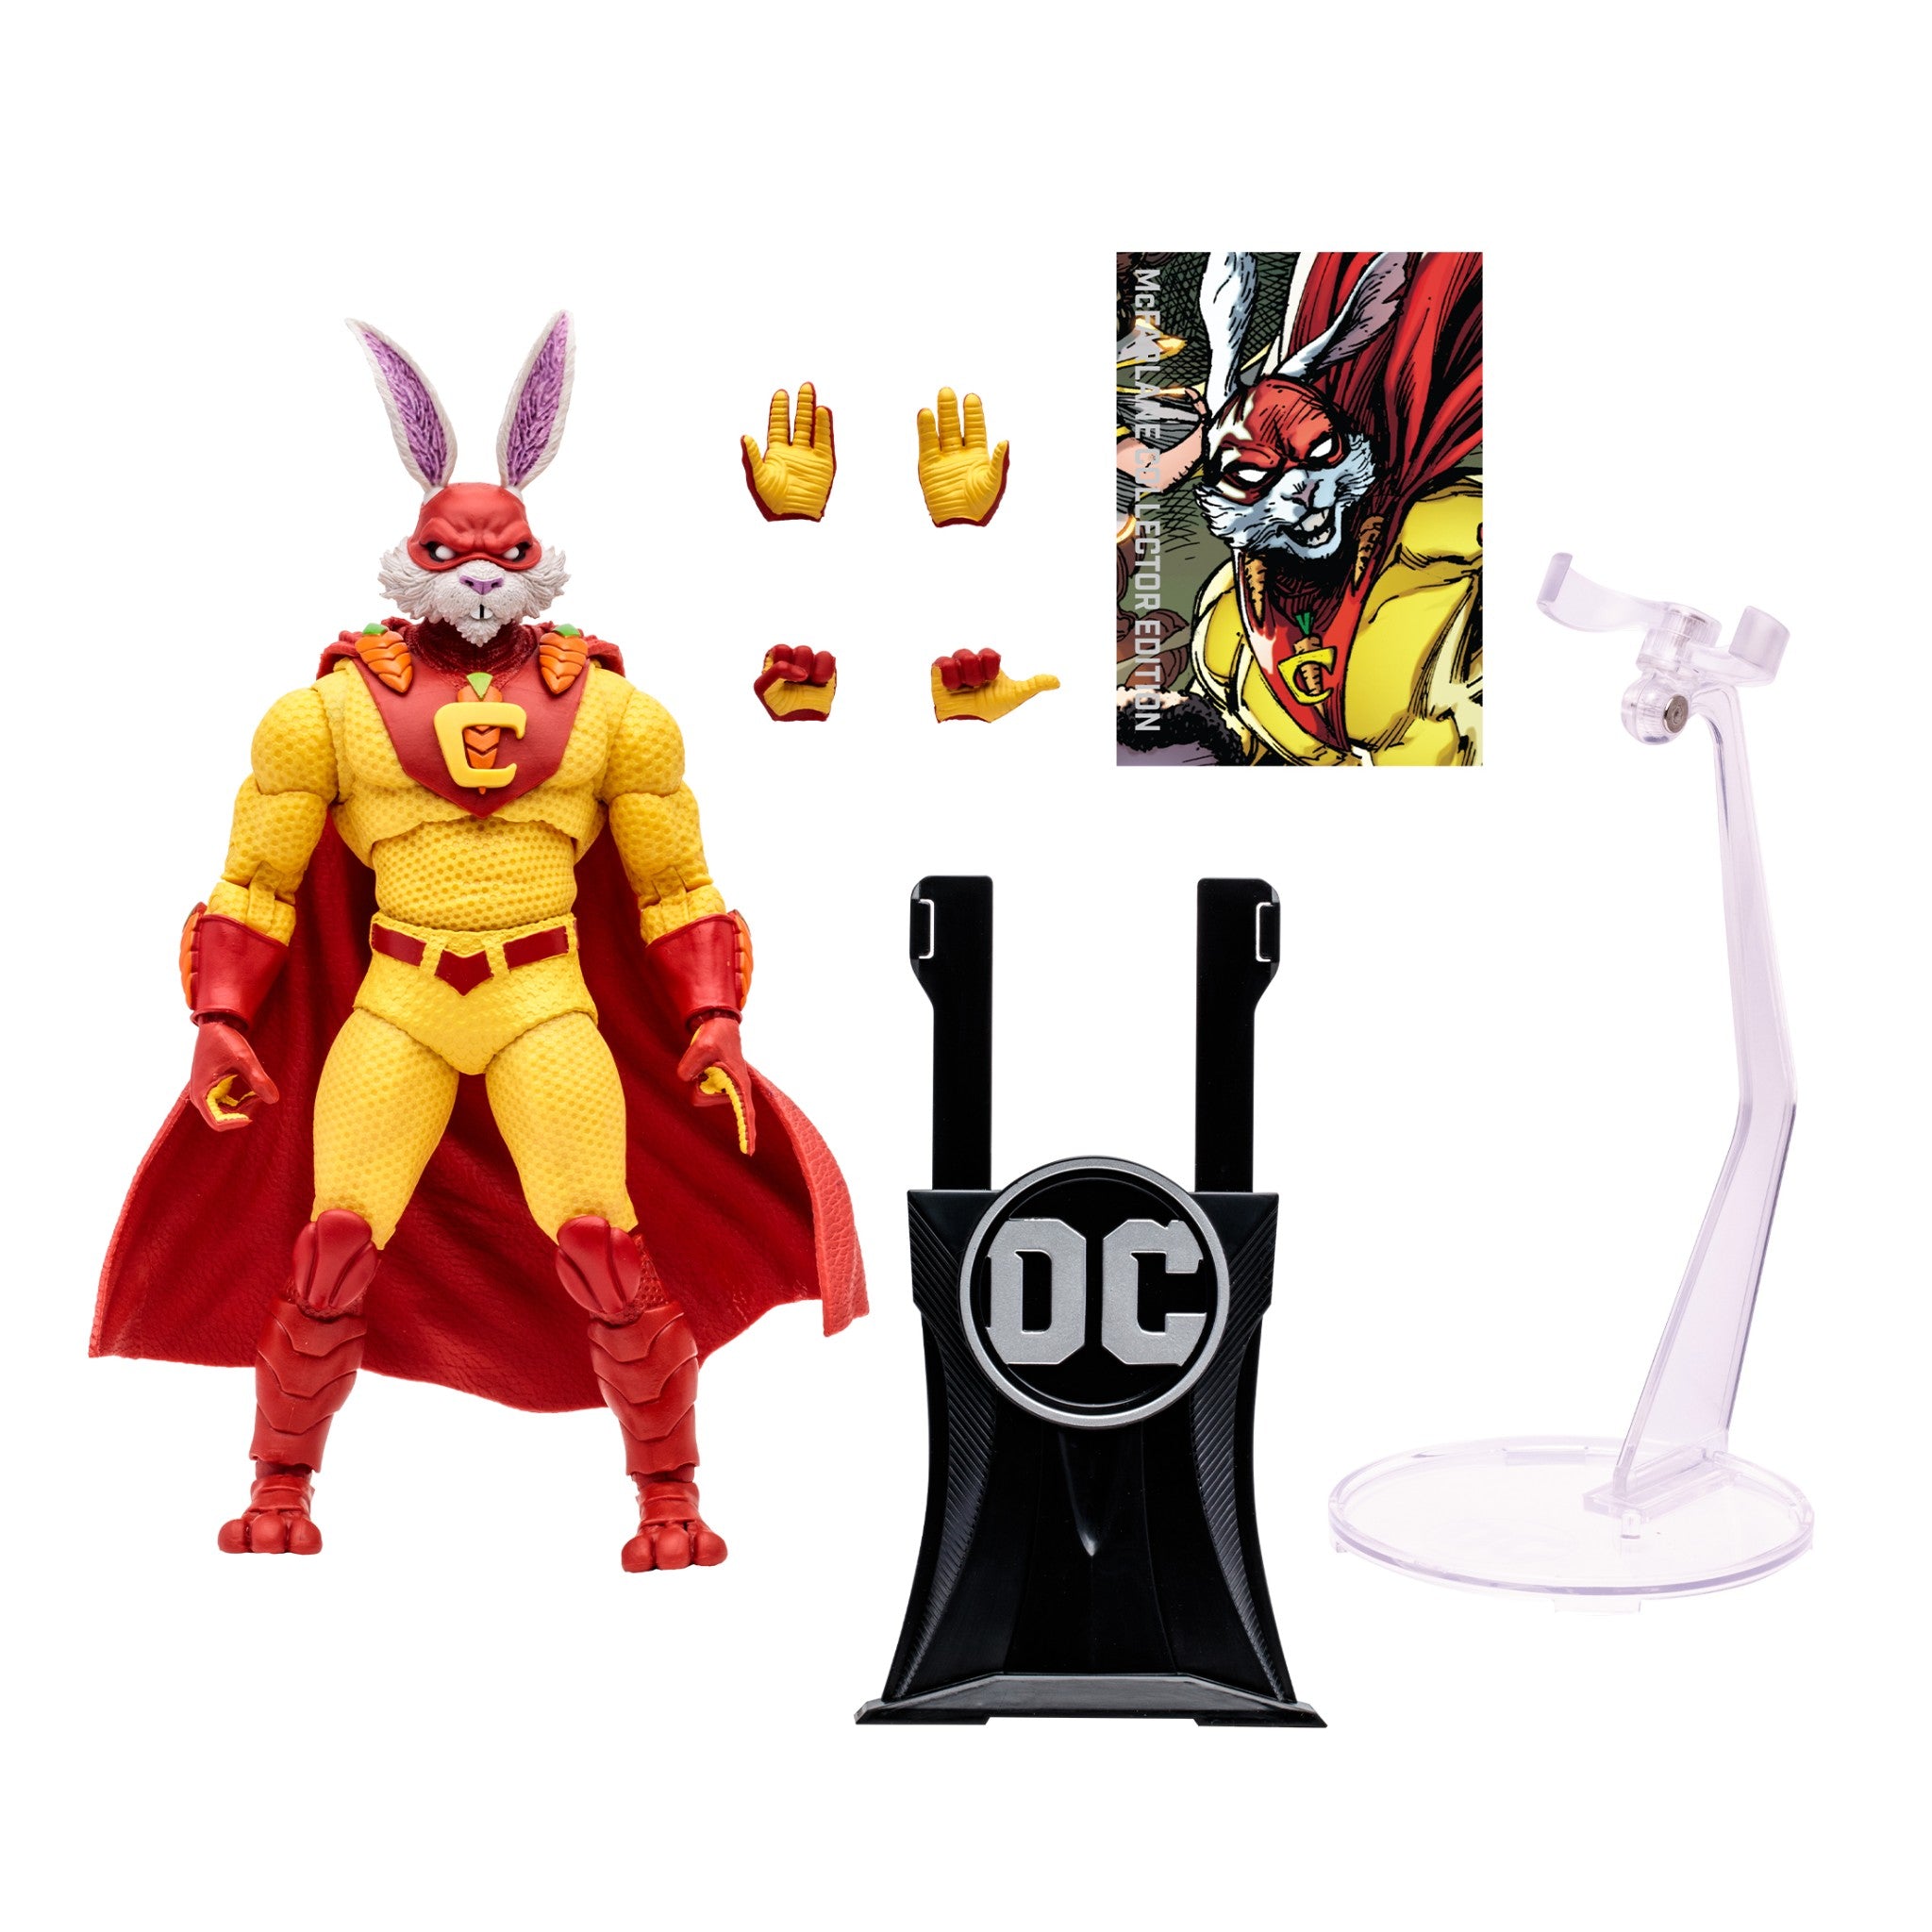 DC Multiverse Collector Edition Captain Carrot JL Incarnate - McFarlane Toys